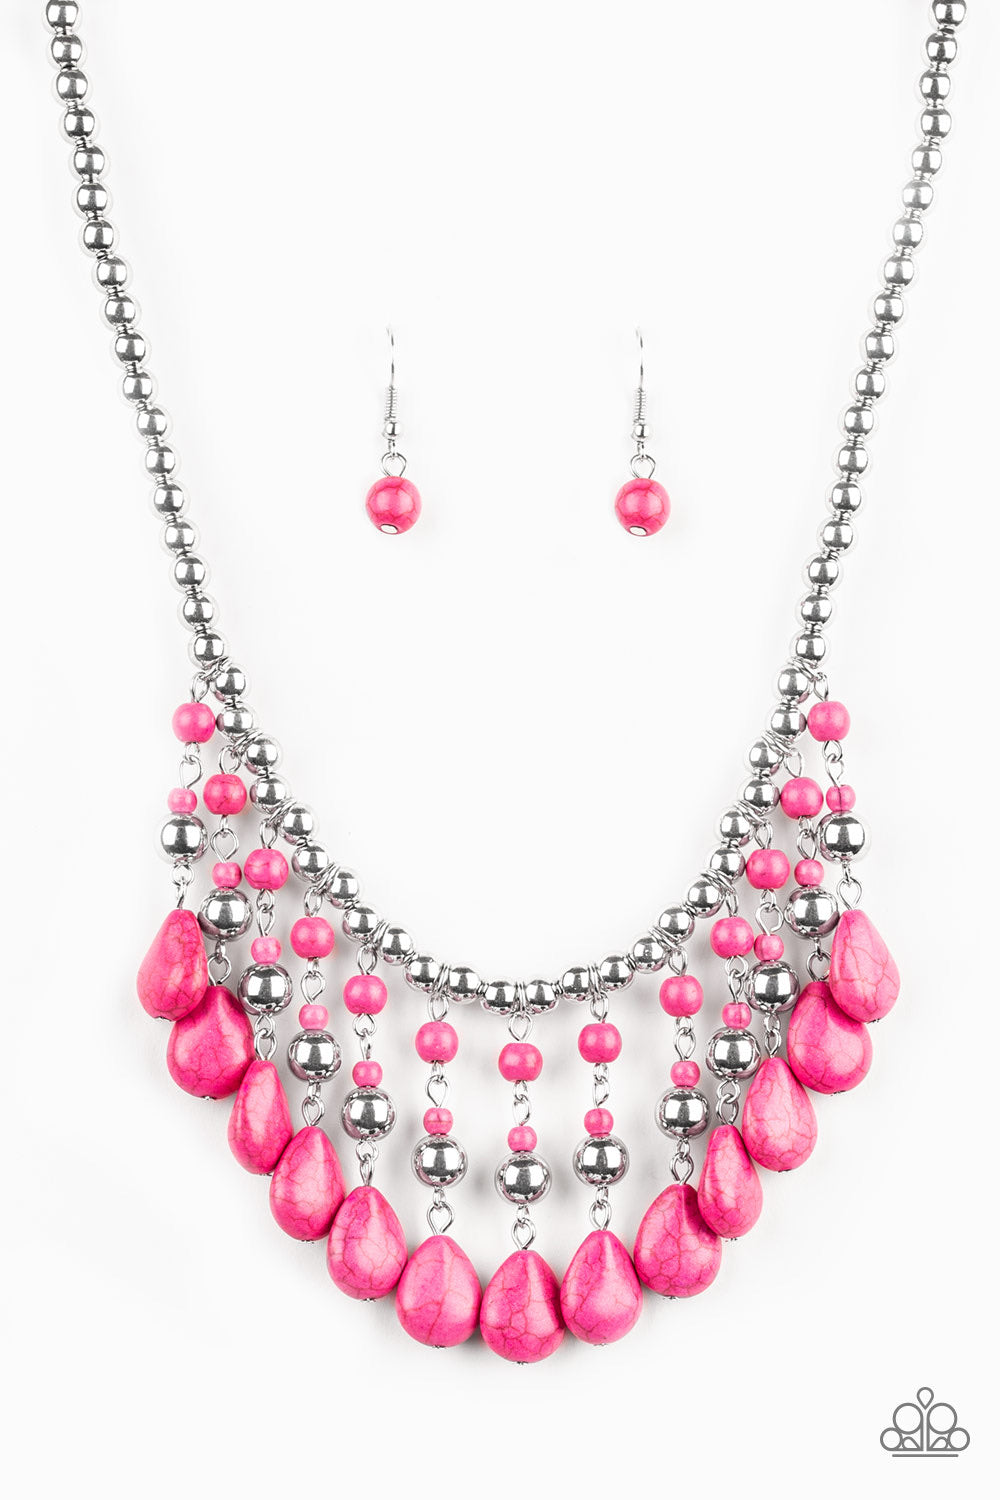 Rural Revival Pink-Necklace